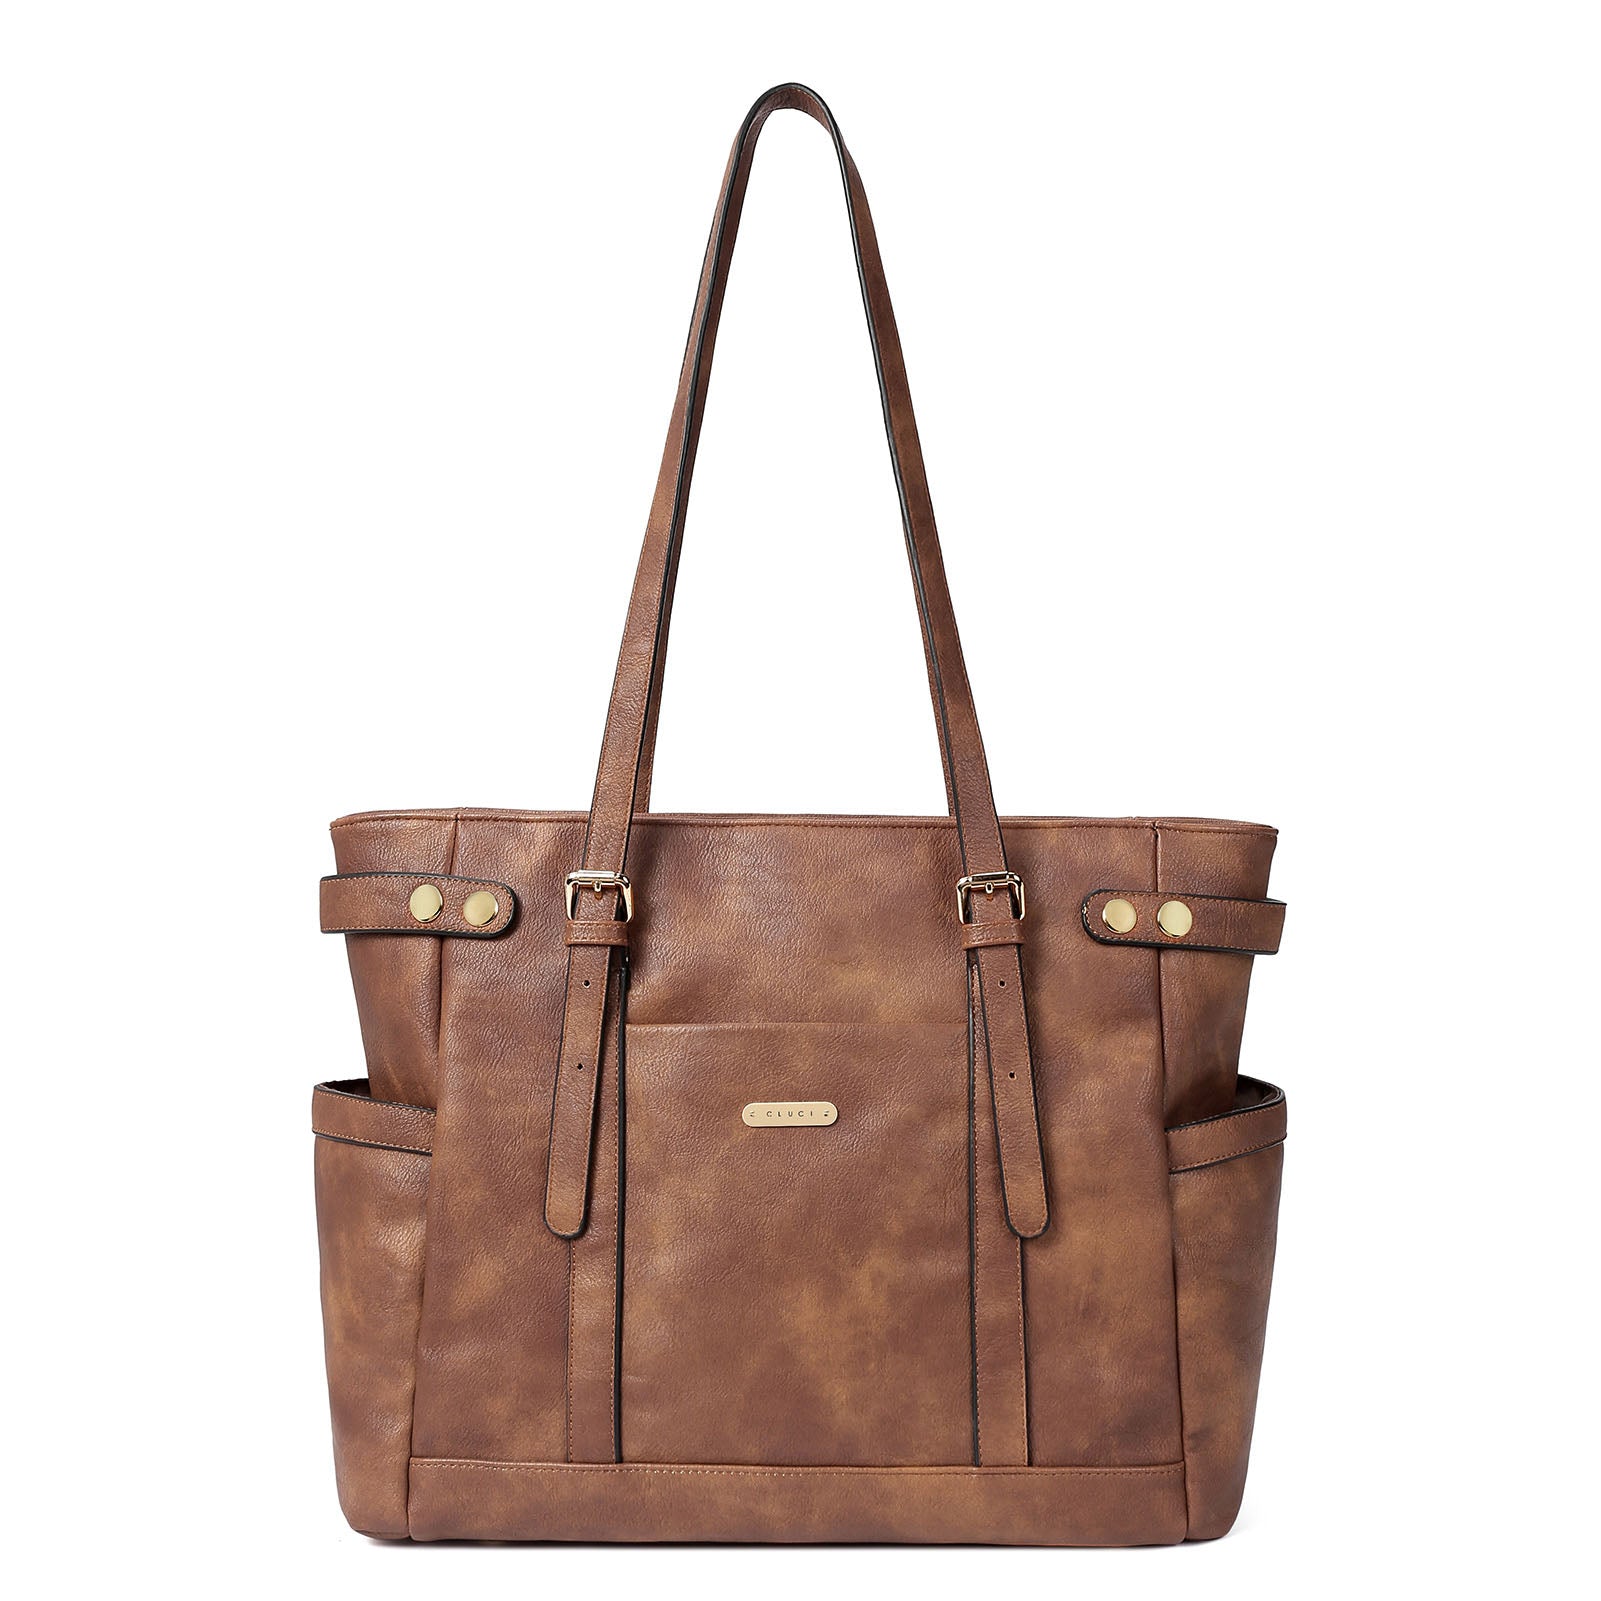 Claire Business Genuine Leather Handbag Briefcase For Women